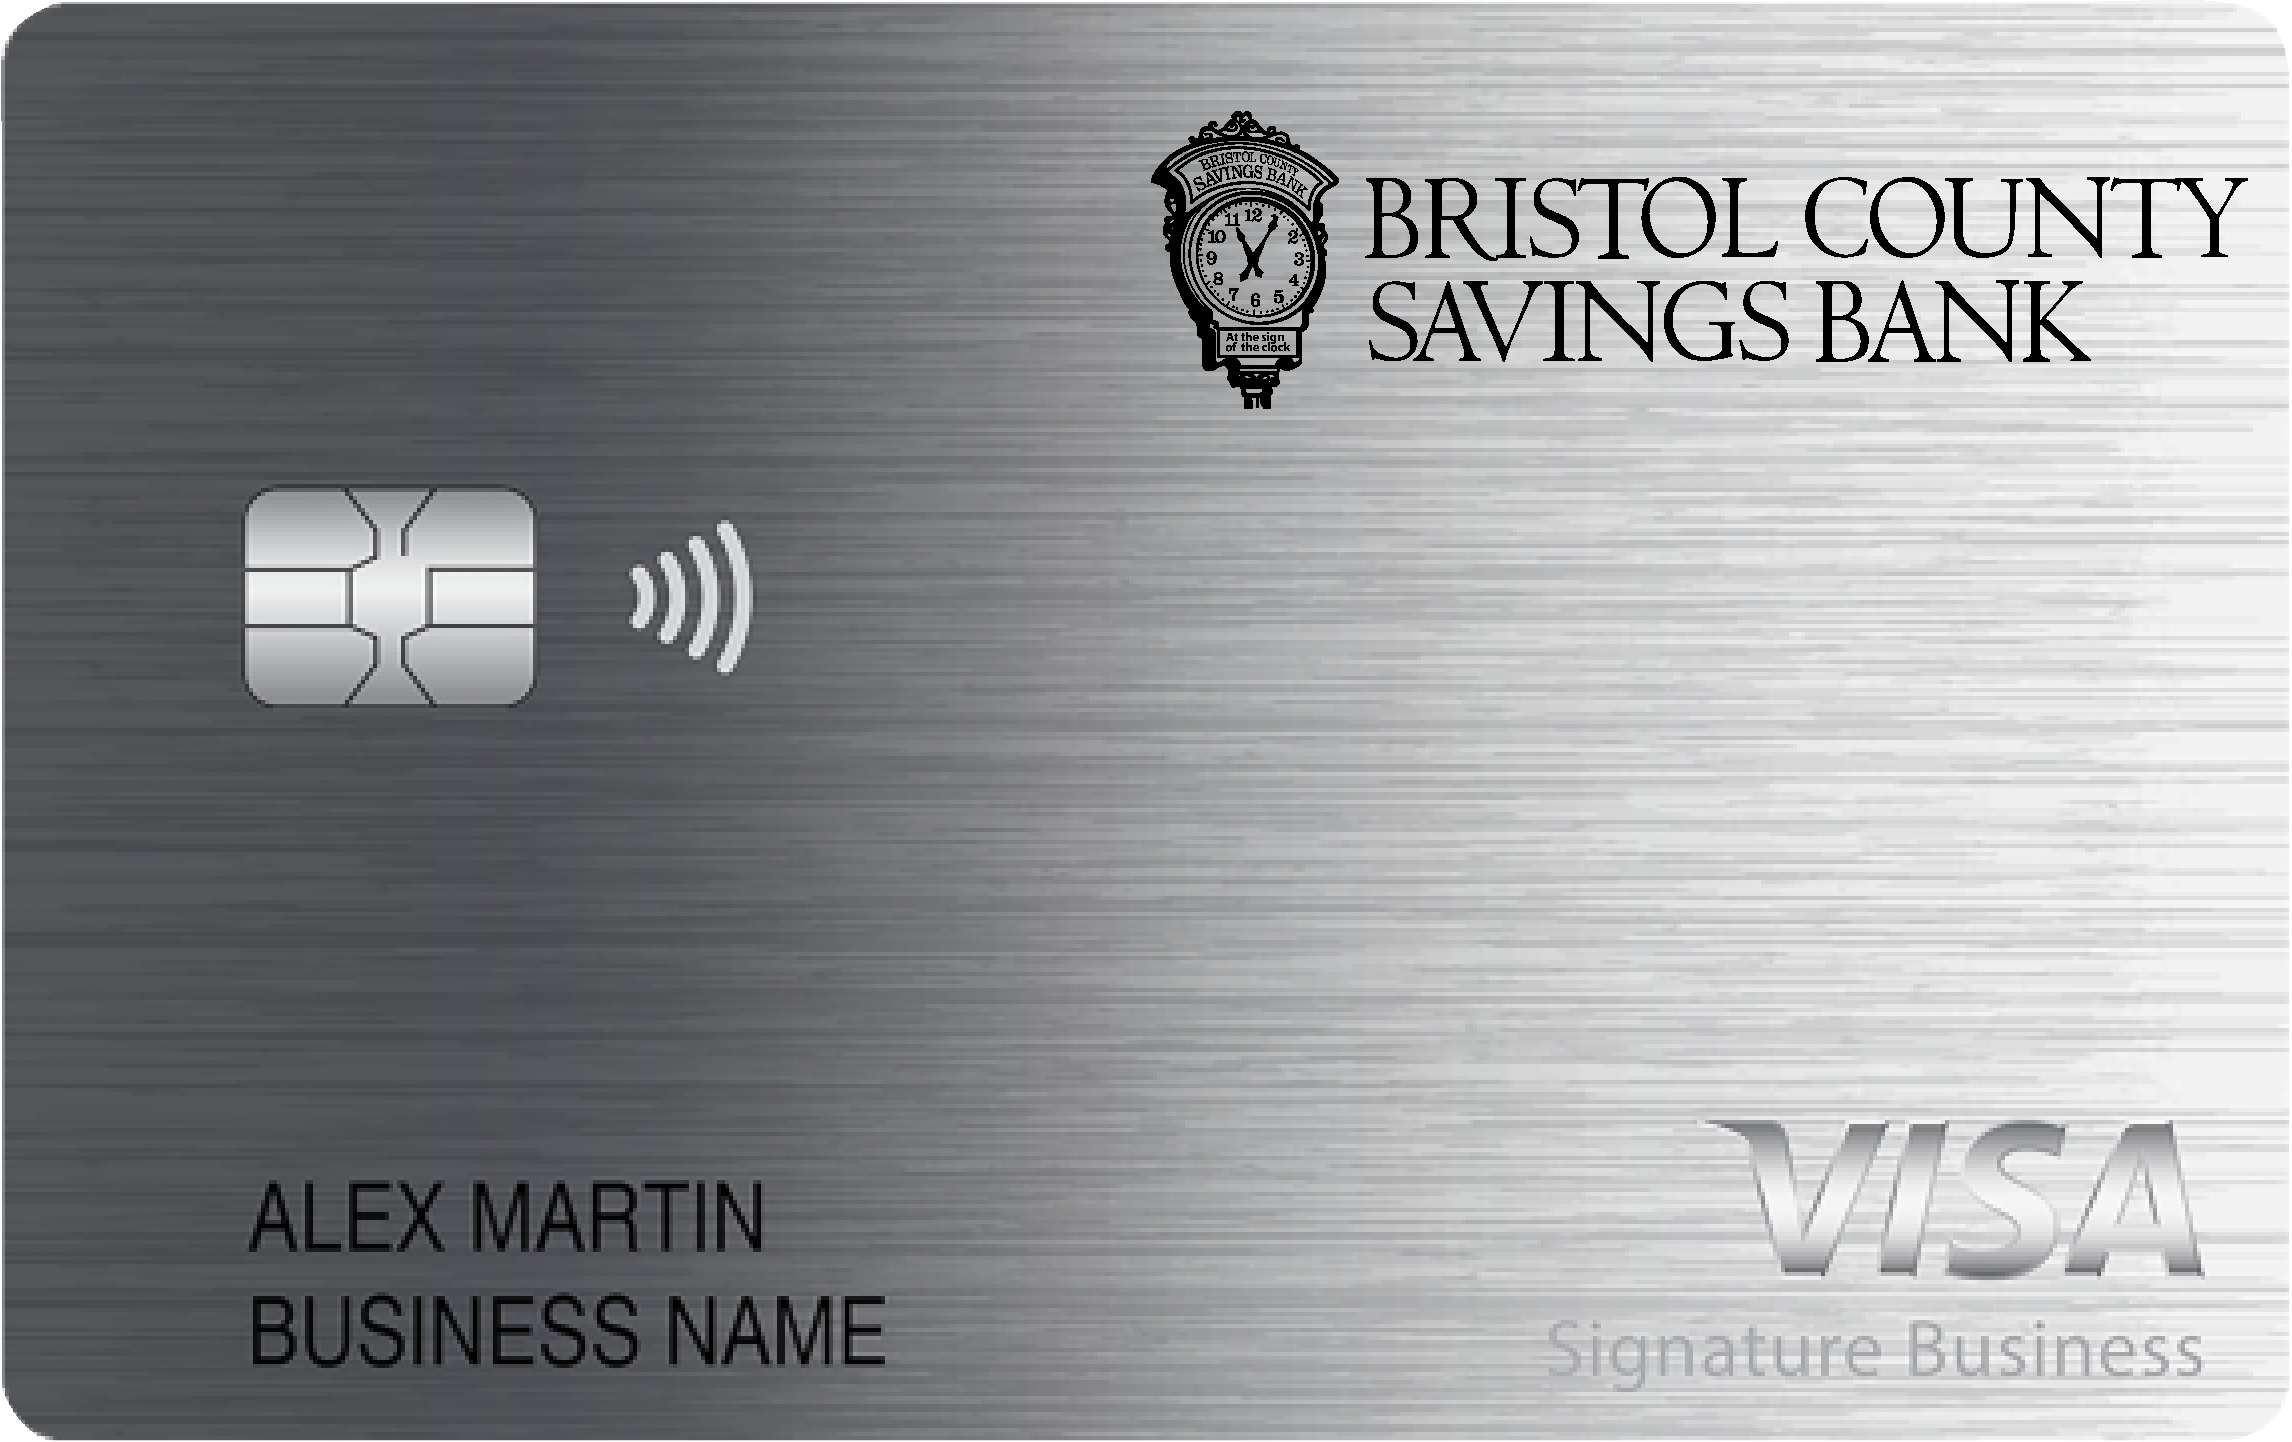 Bristol County Savings Bank Smart Business Rewards Card